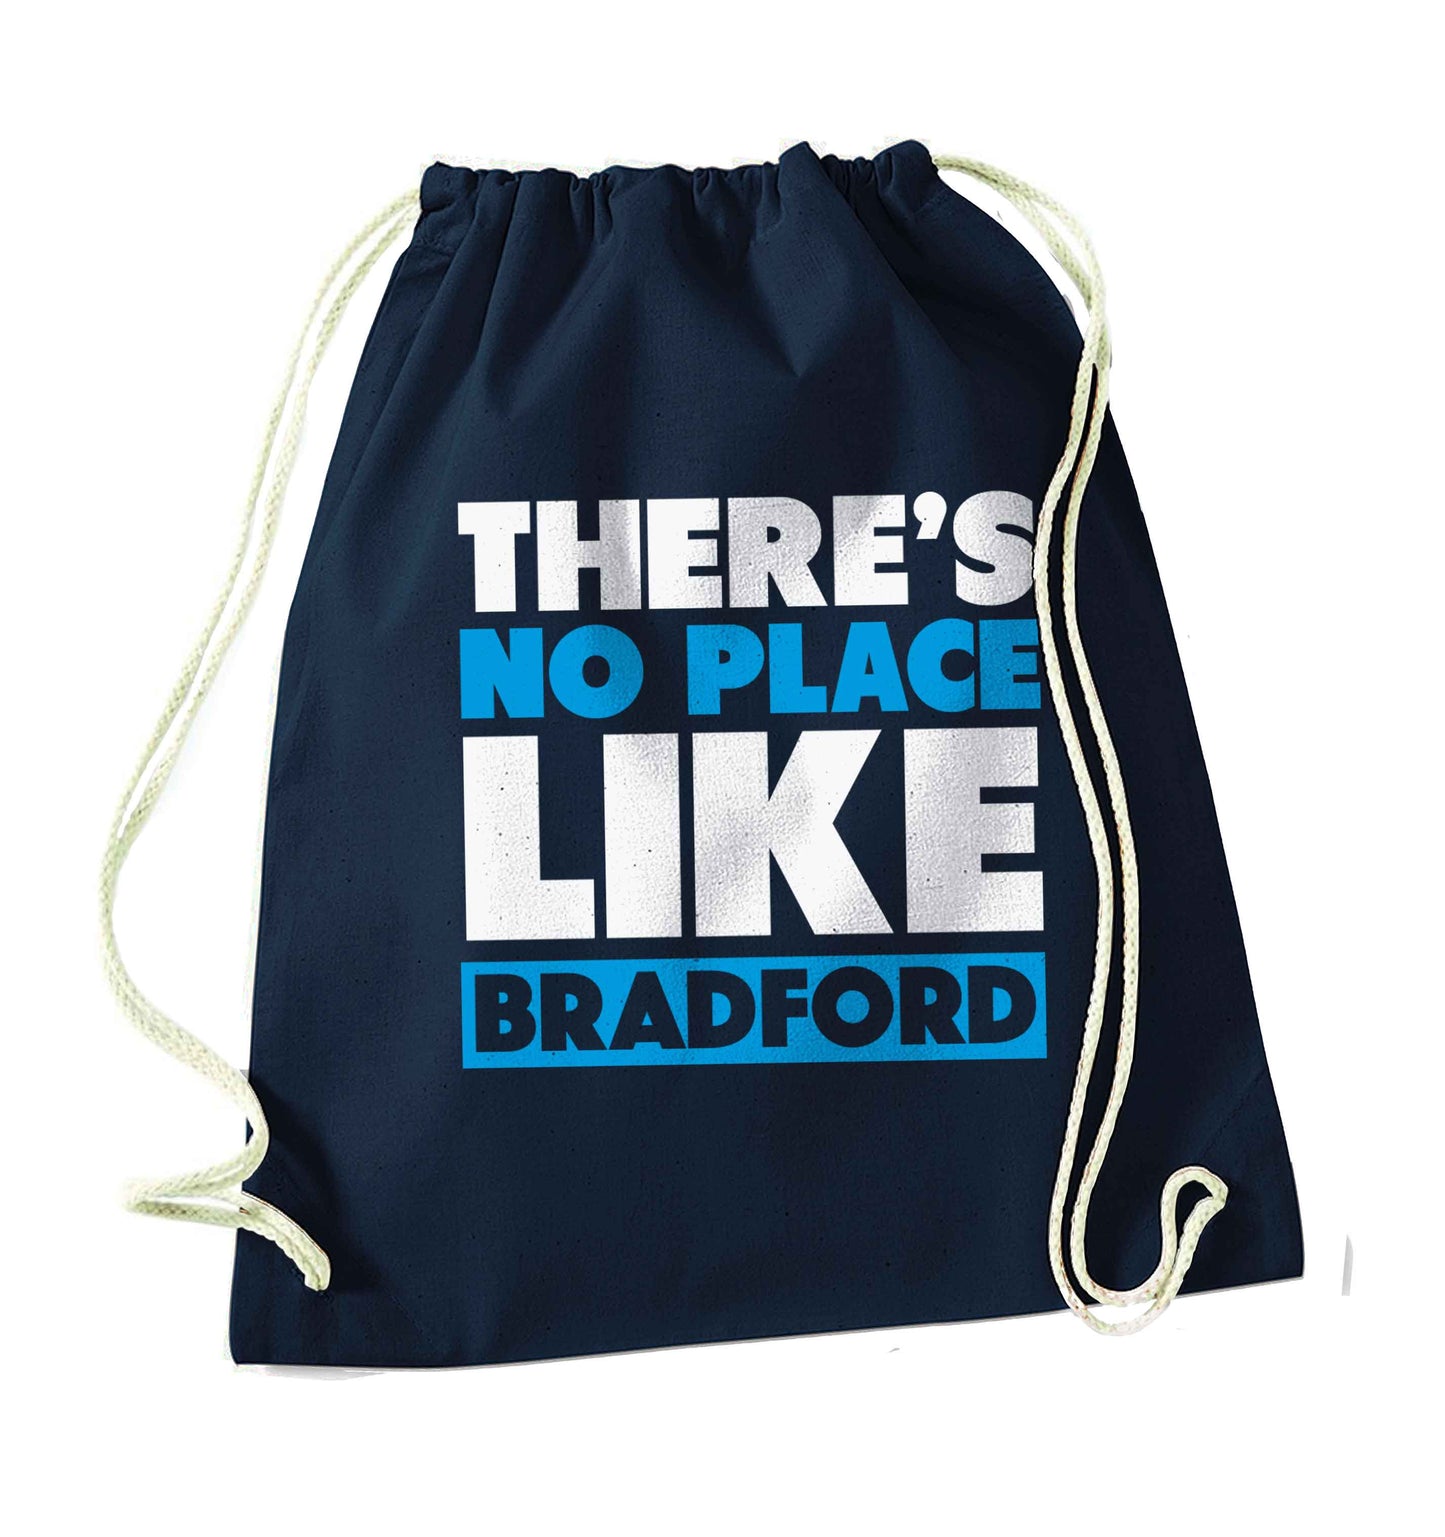 There's no place like Bradford navy drawstring bag